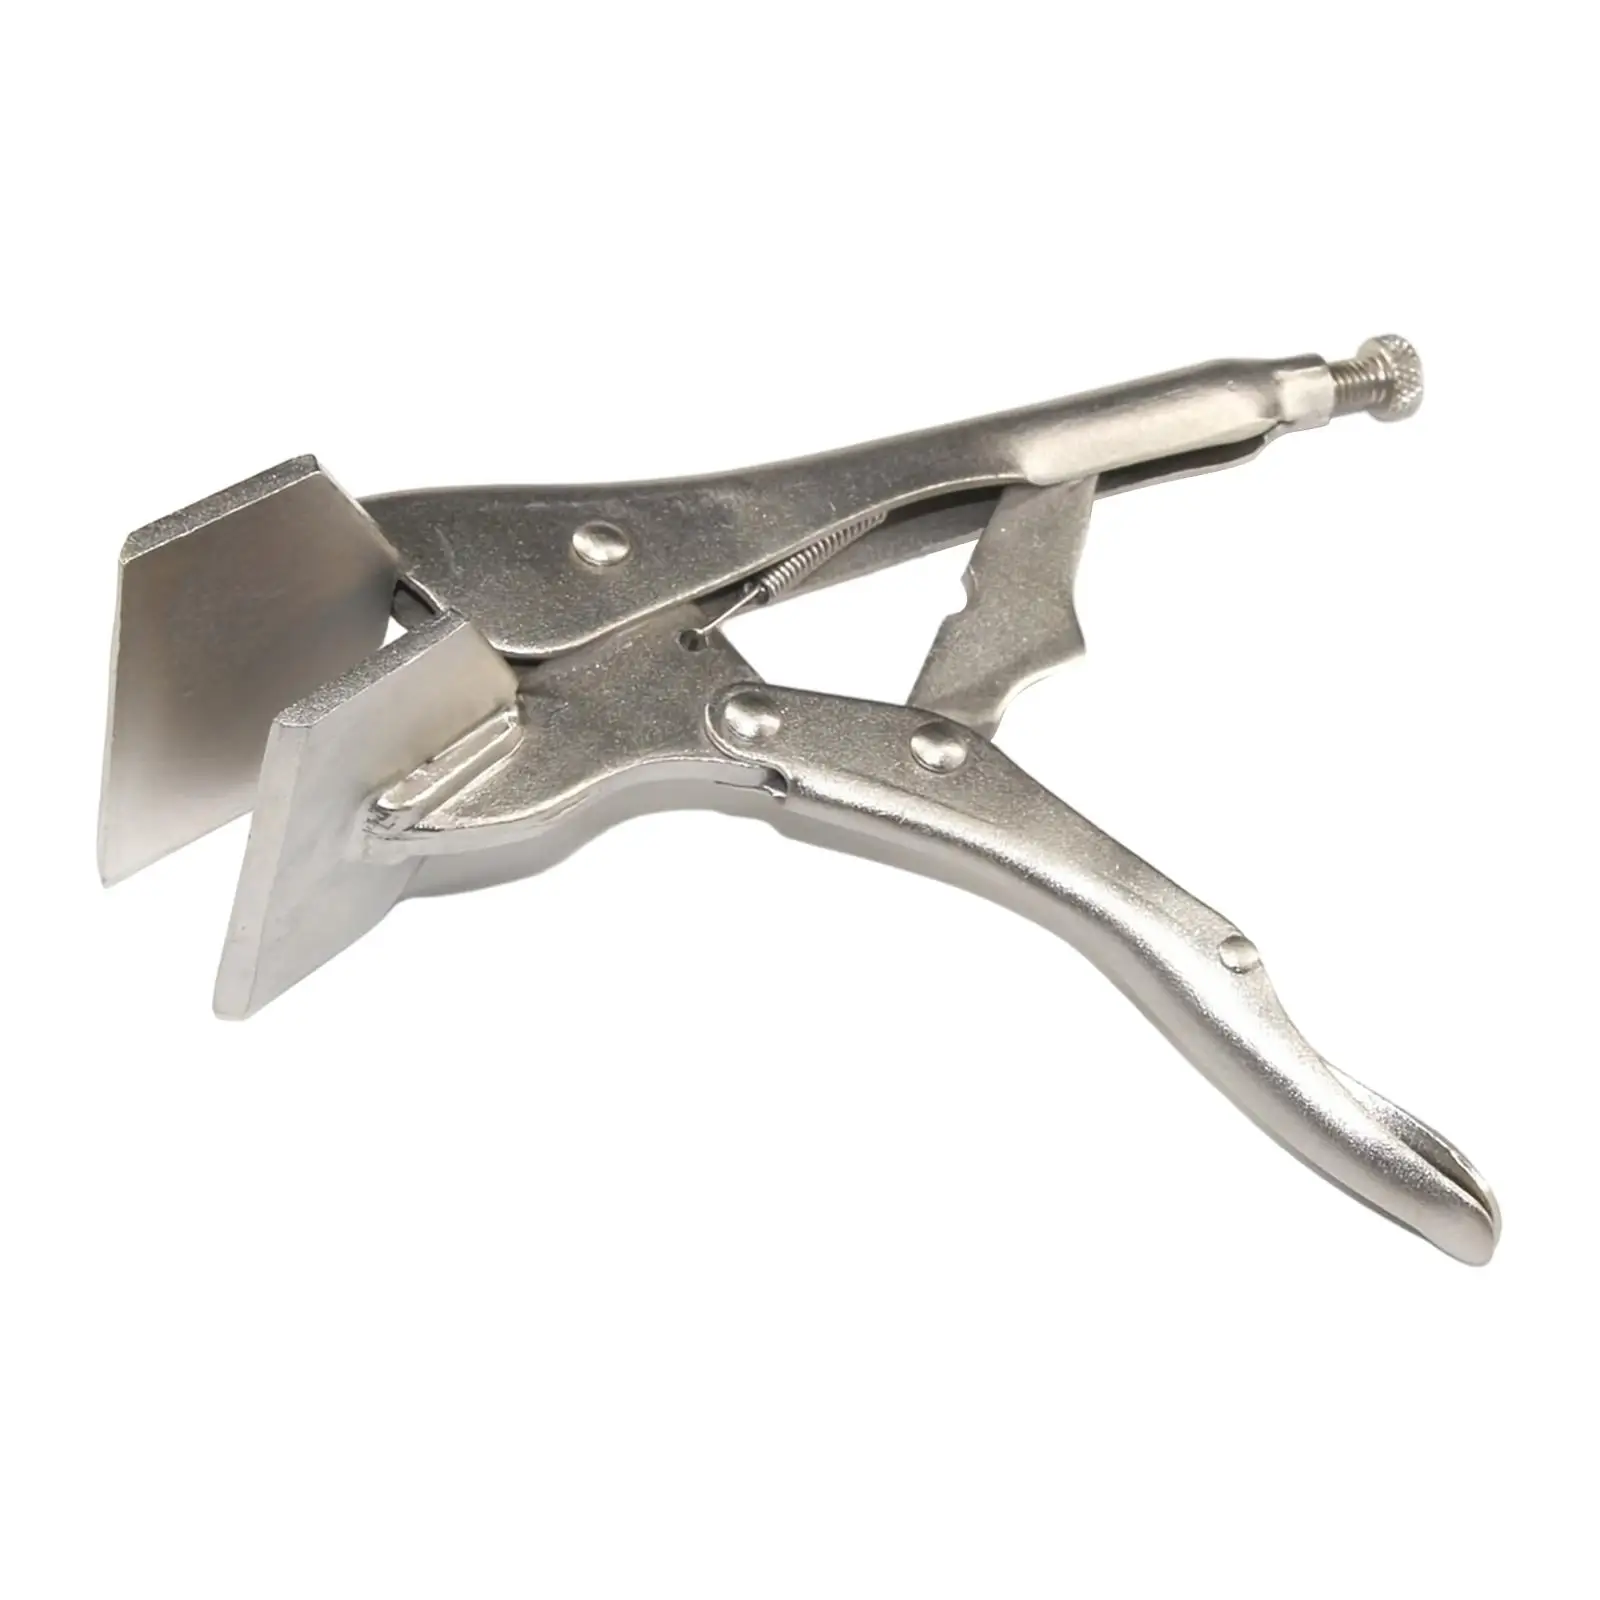 Locking Sheet Metal Clamp Multifunctional Sturdy Heavy Duty Adjustable Opening Professional Sheet Metal Tool Hand Seamers